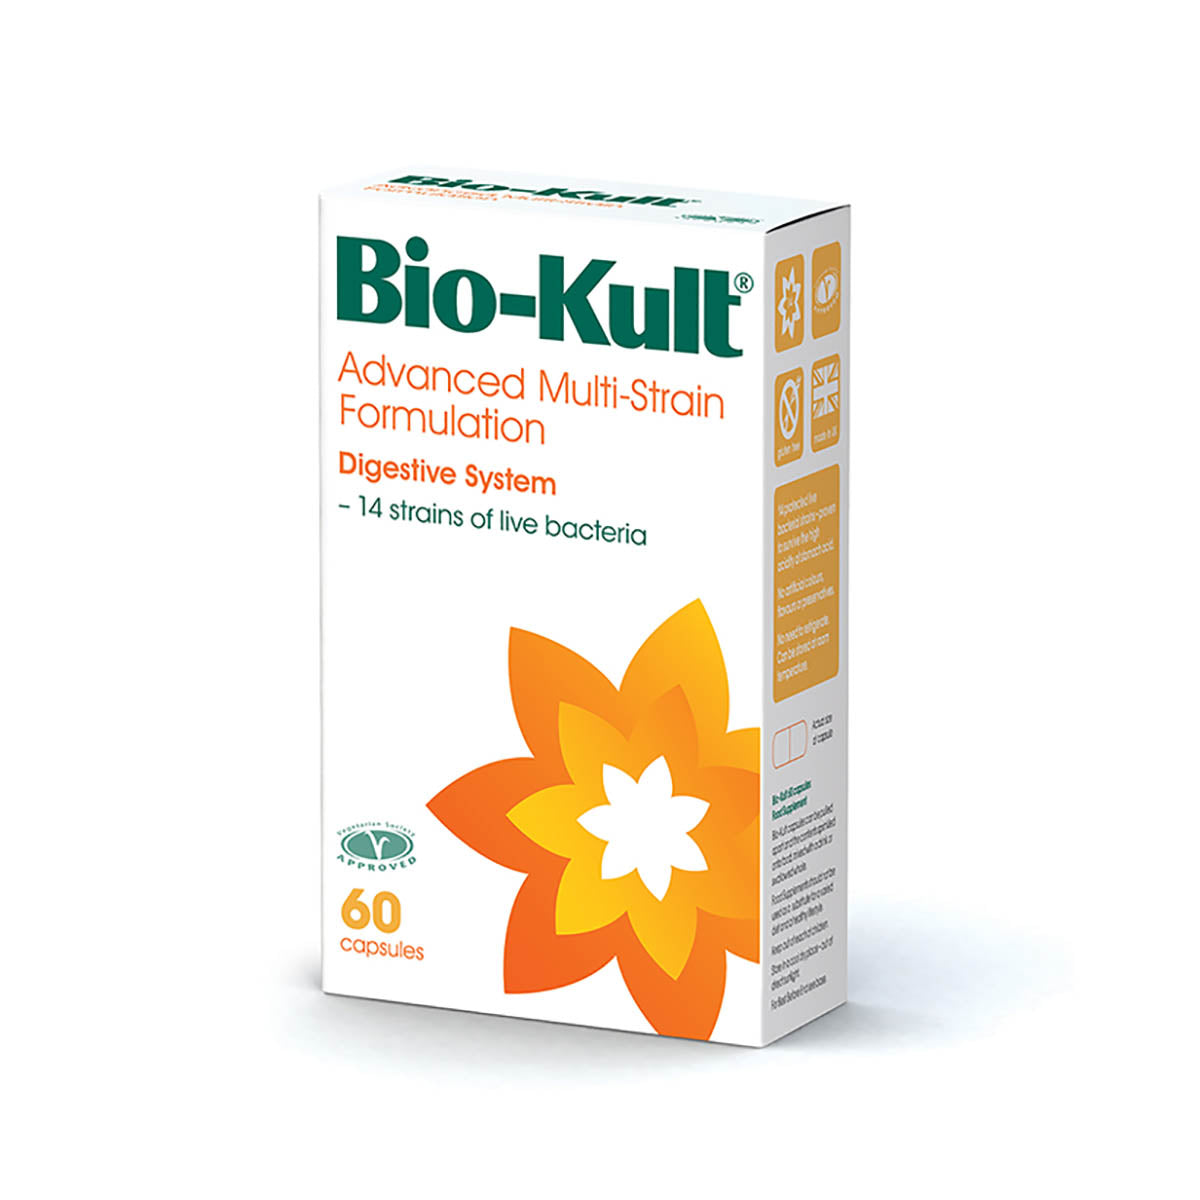 Bio-Kult Advanced Multi-Strain Formulation 60 Capsules